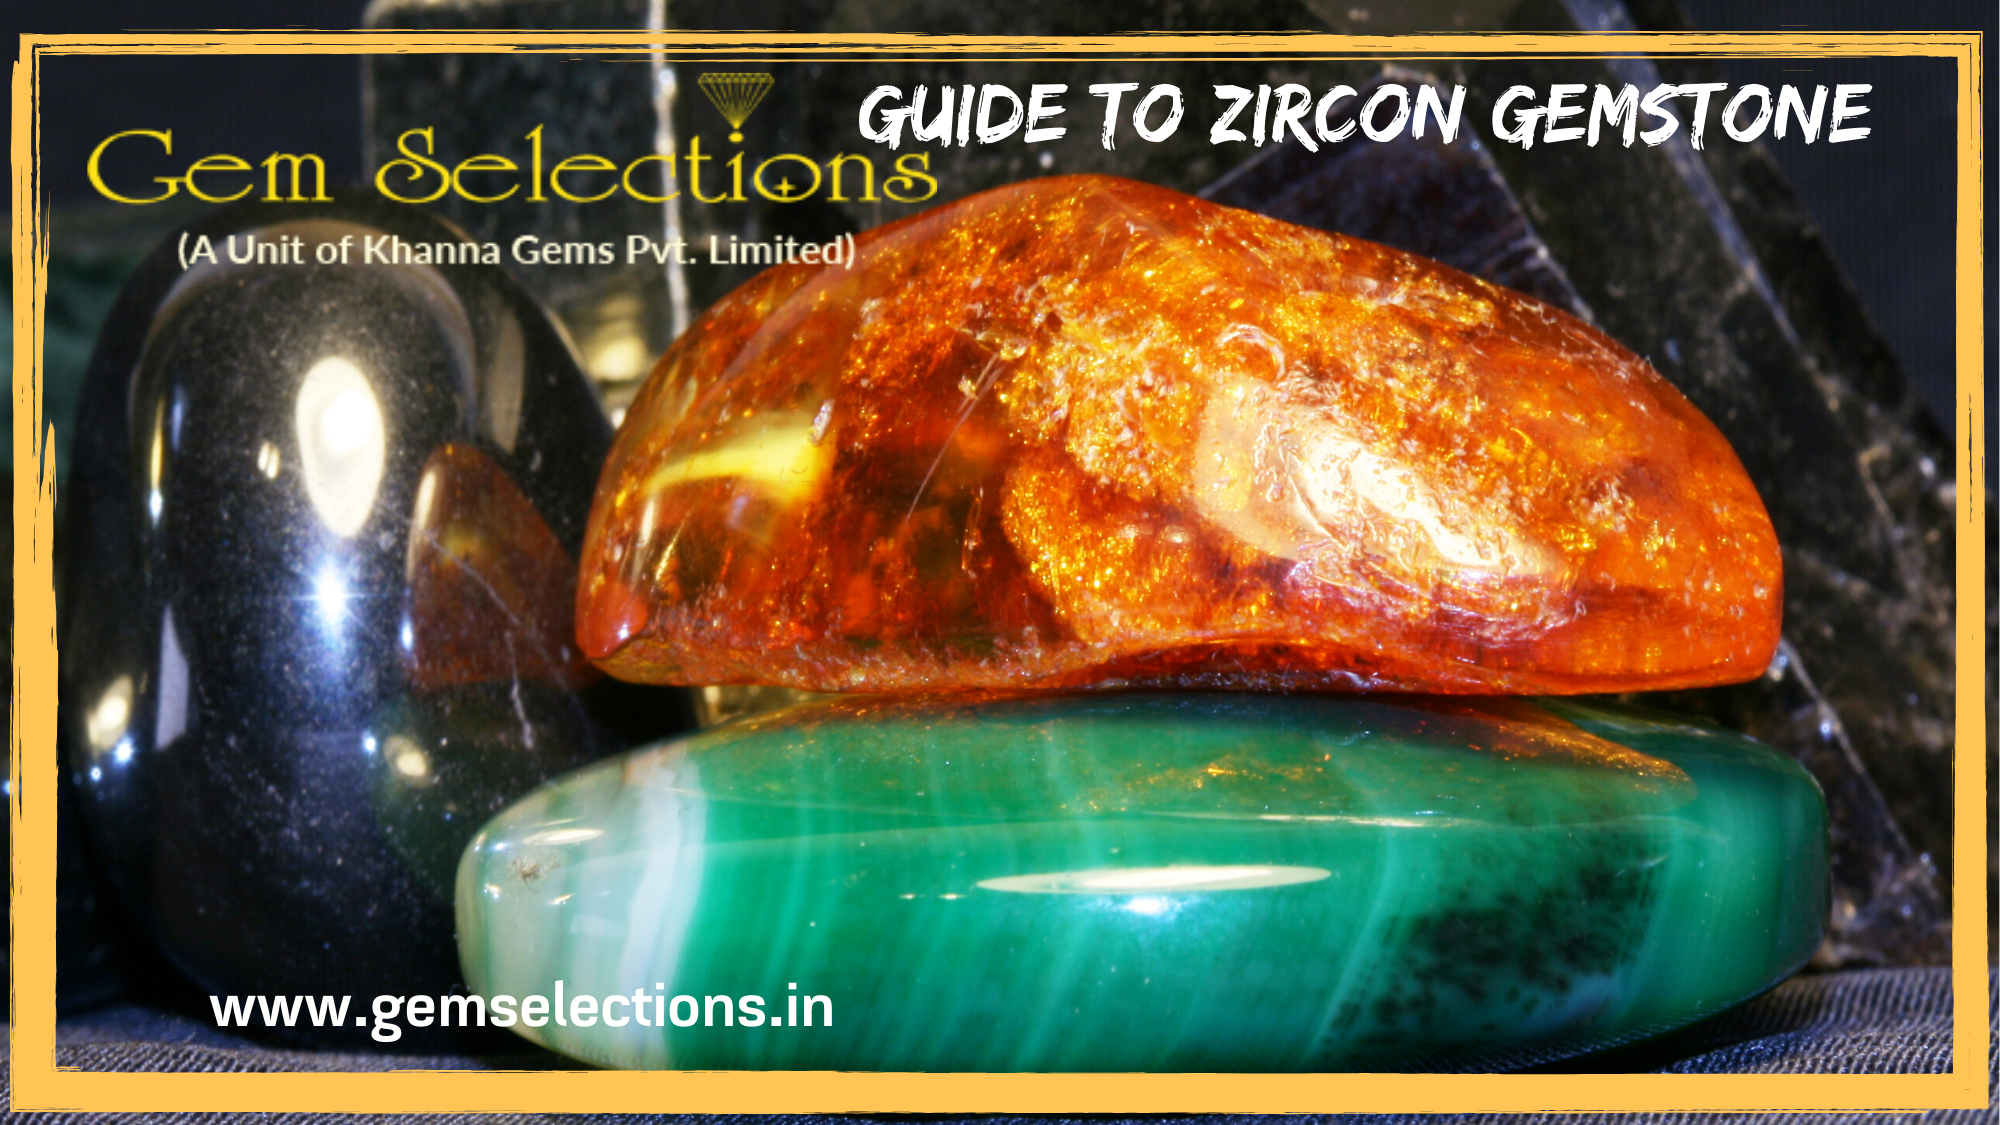 Complete guide to Zircon gemstone